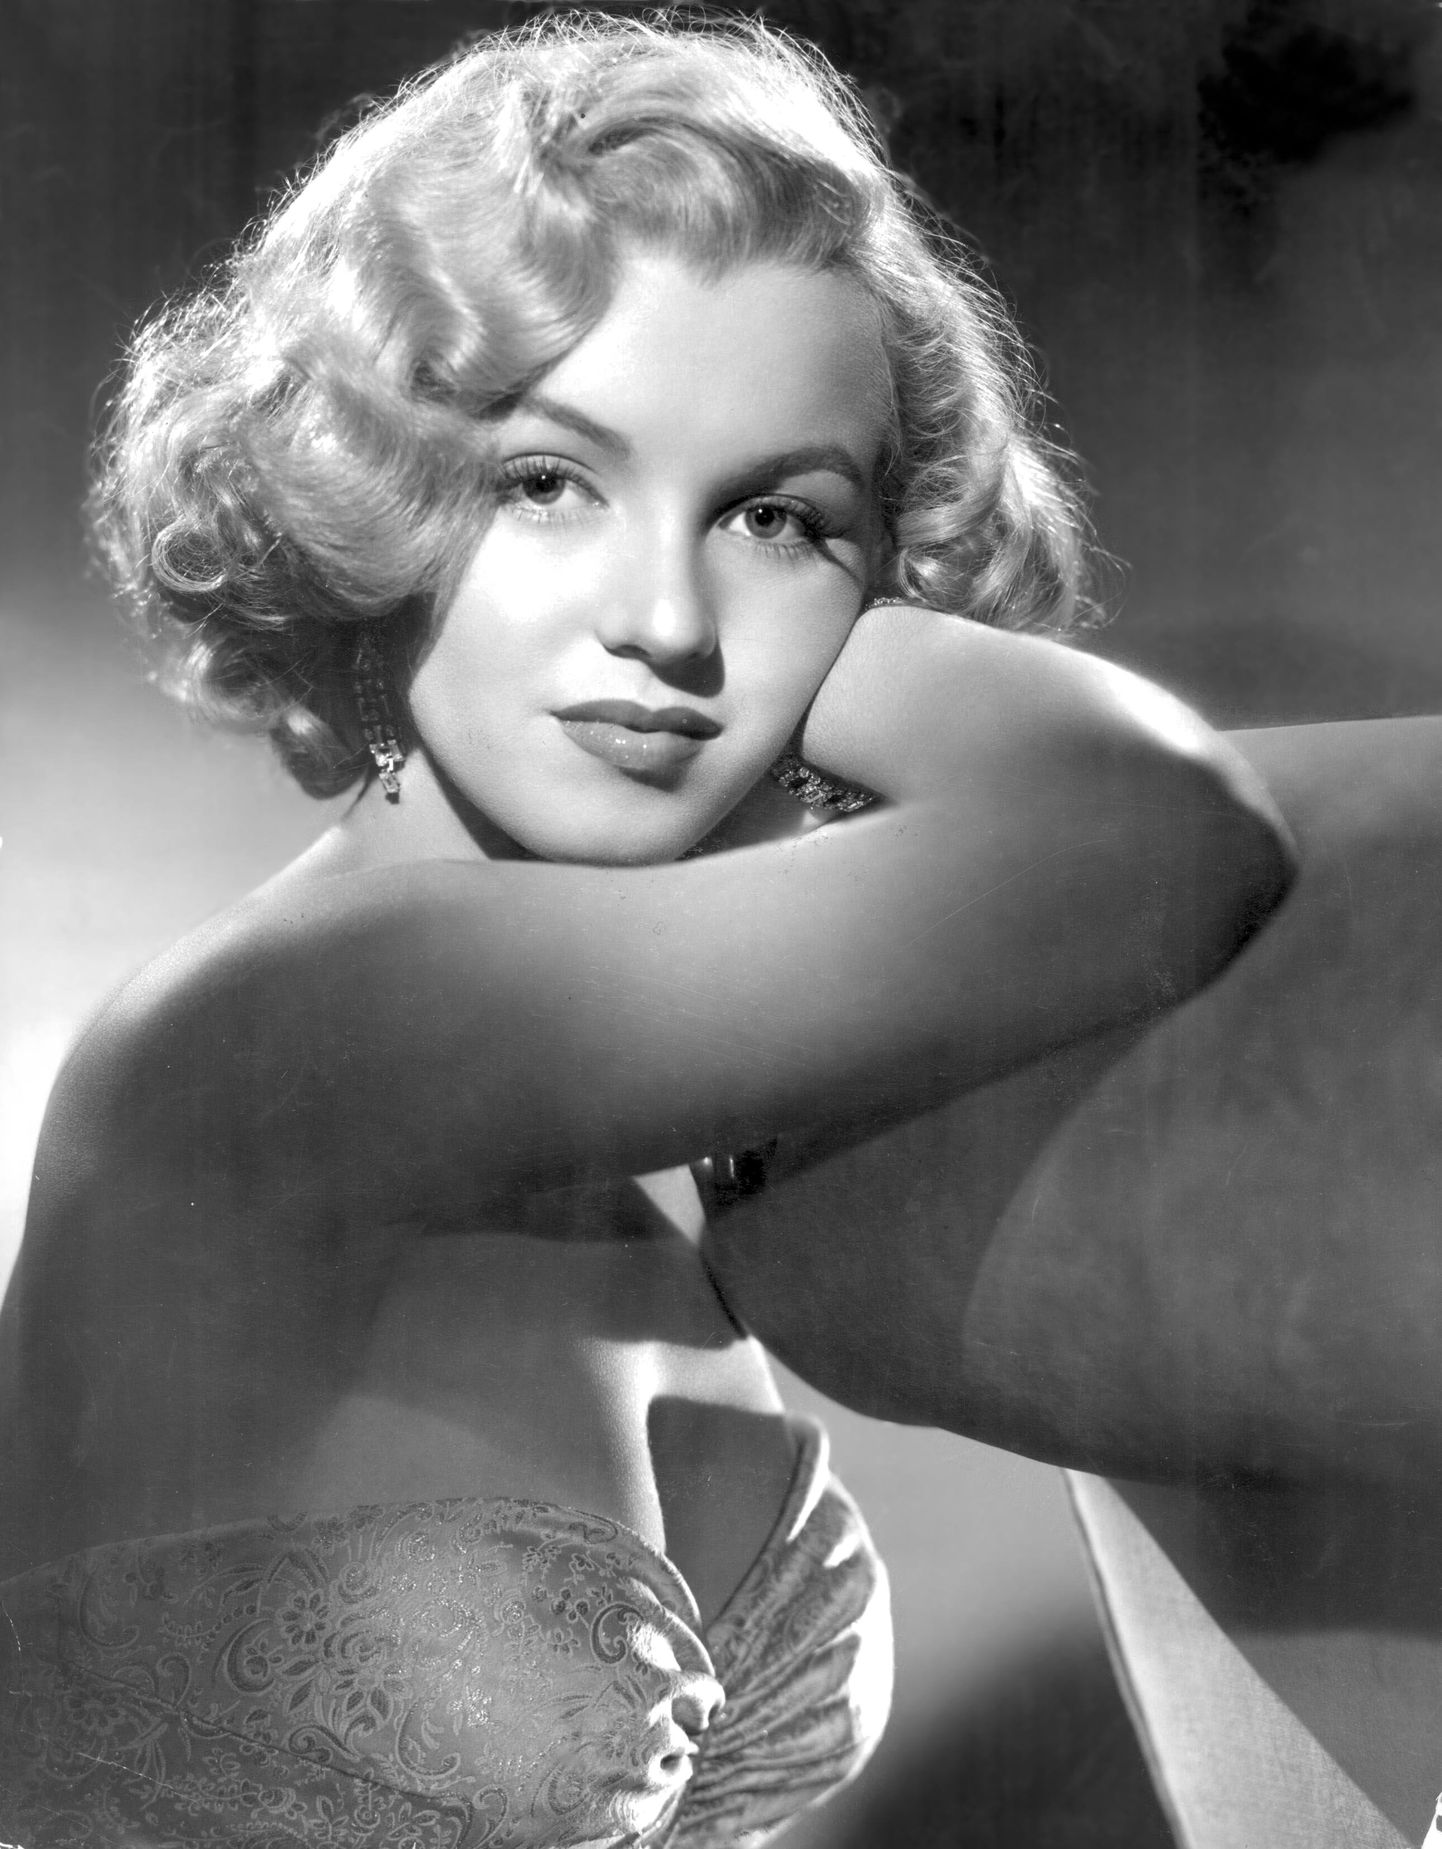 Marilyn Monroe – Norma Jean Mortensen